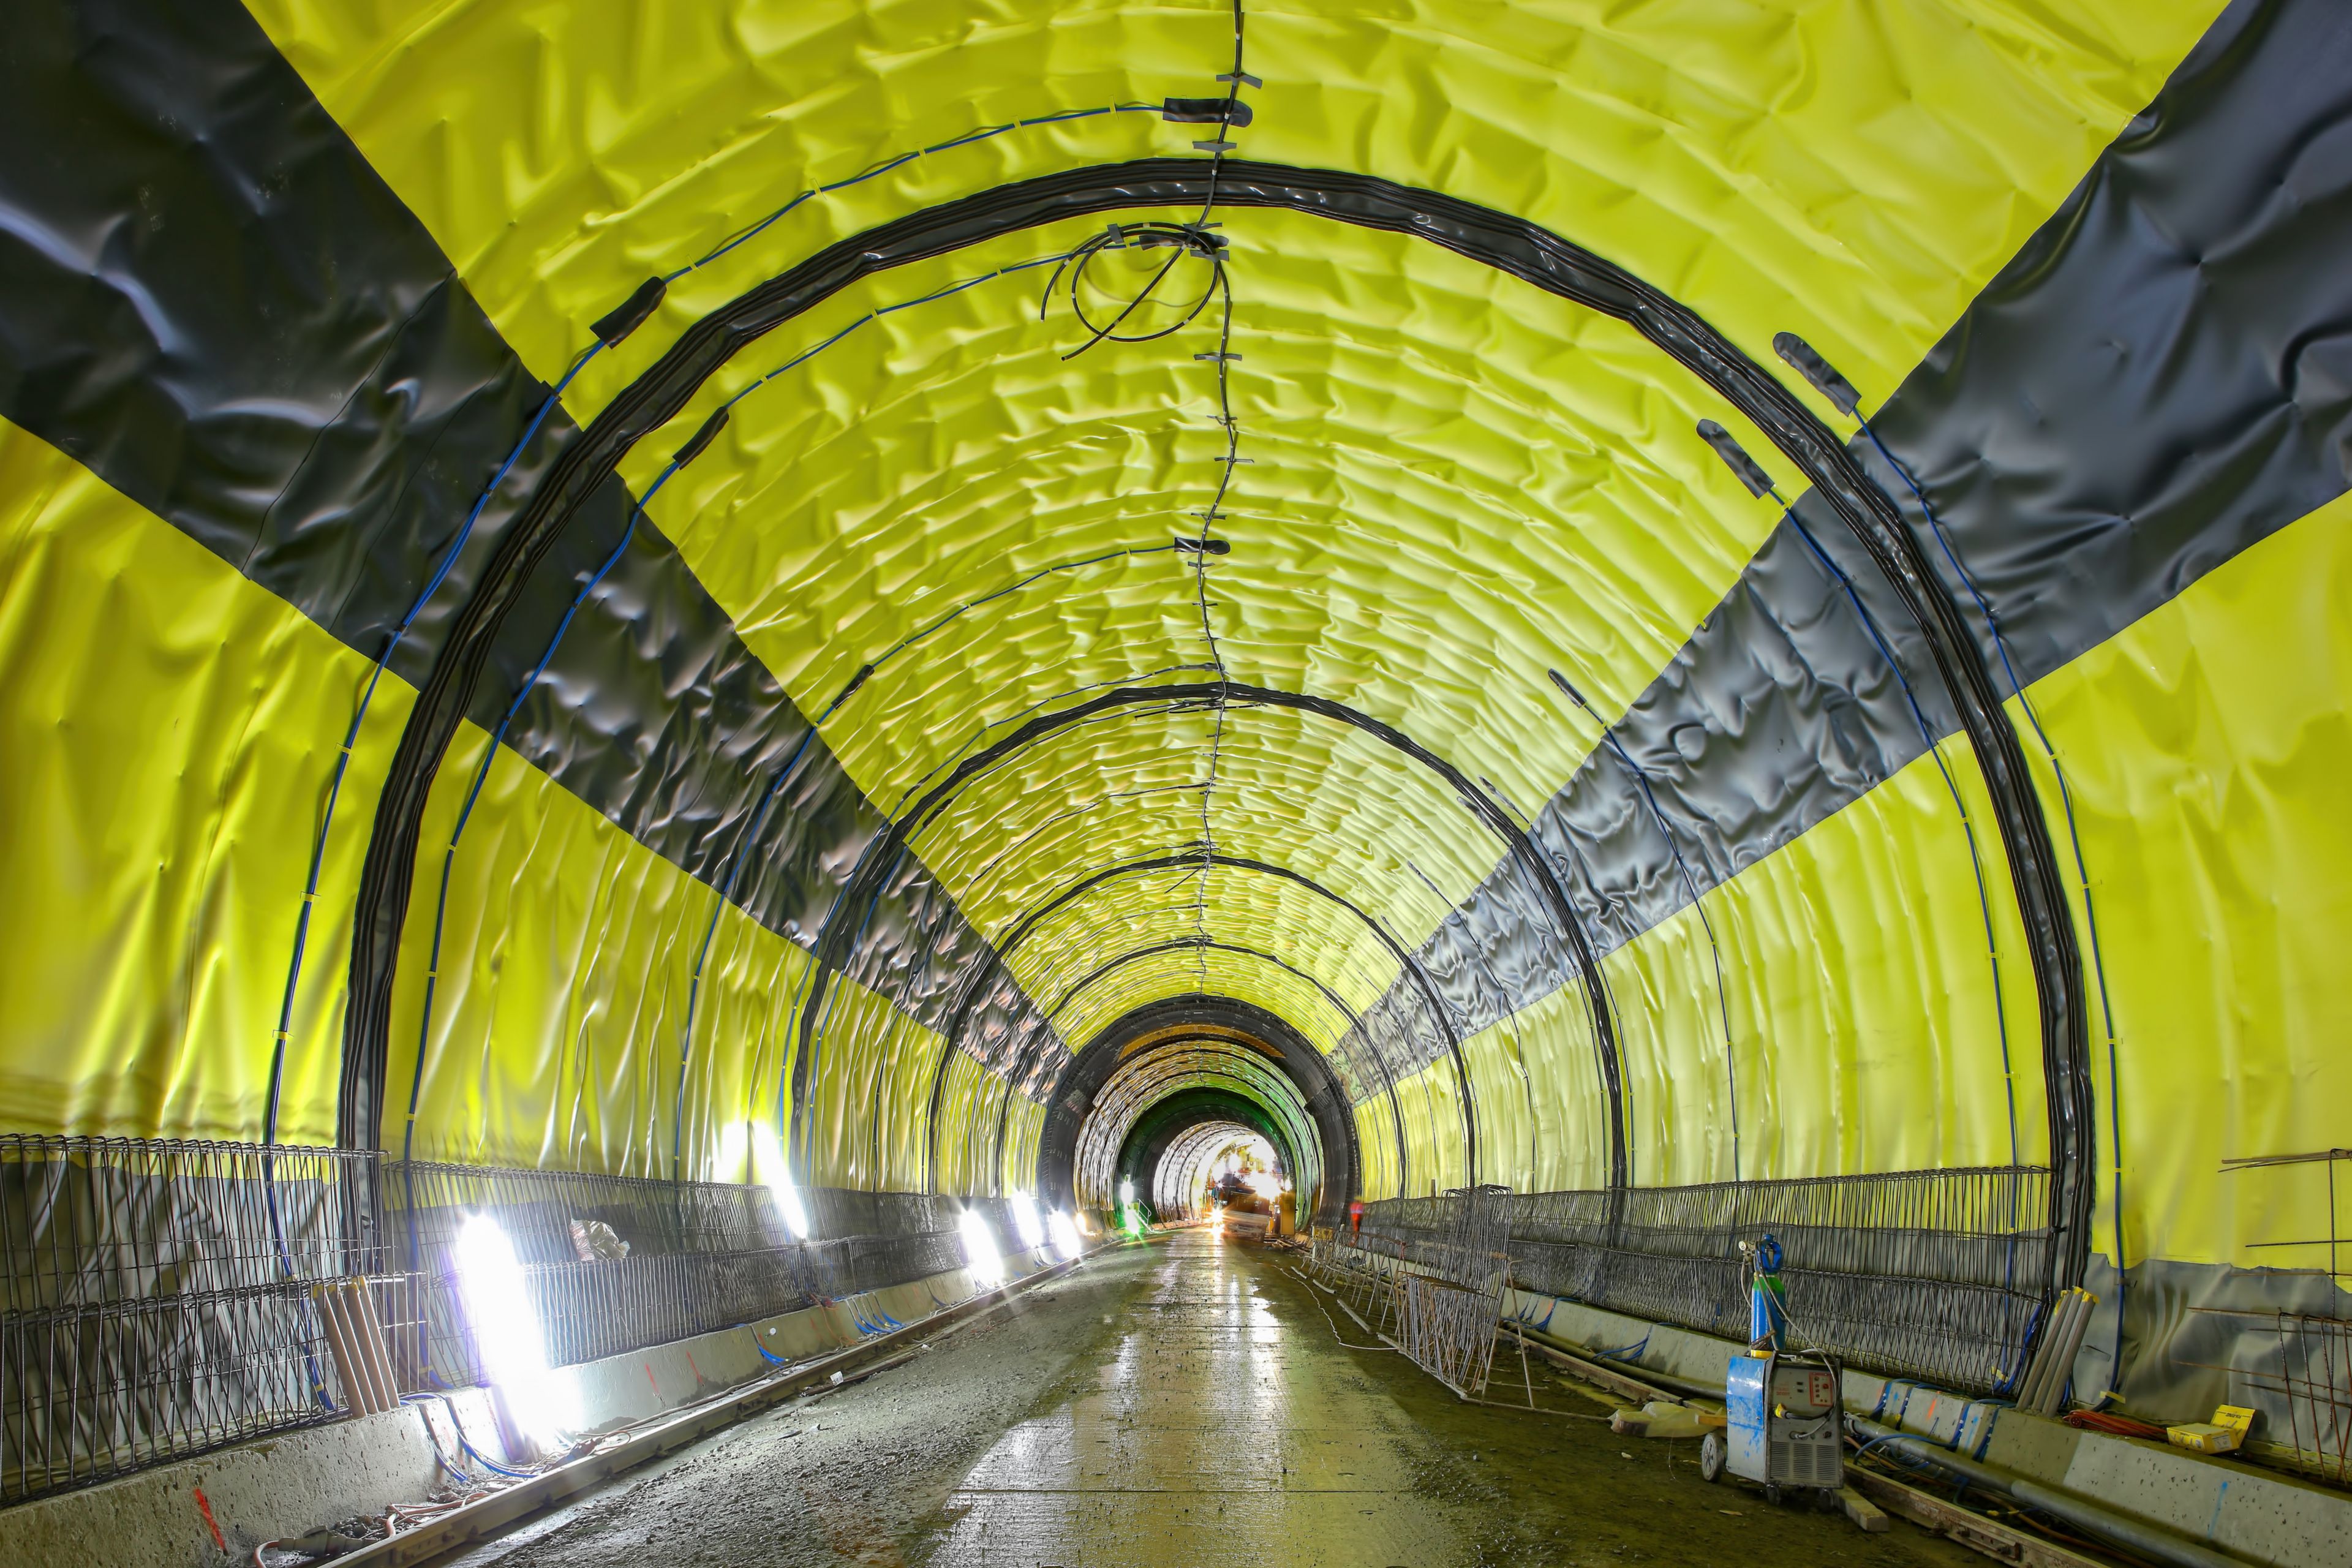 Sikaplan sheet waterproofing system protecting Visp tunnel in Switzerland